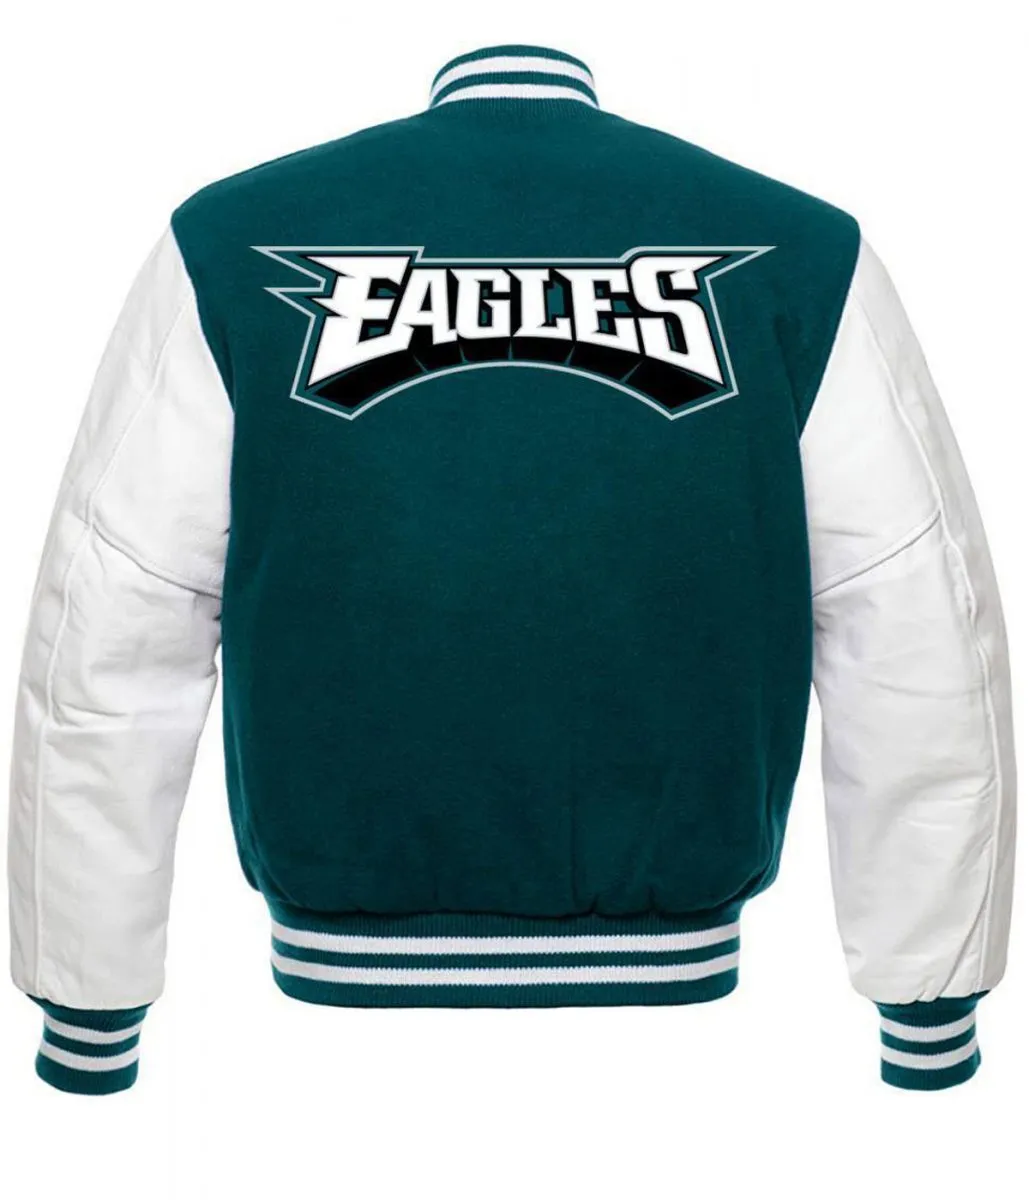 Philadelphia Eagles Green and White Letterman Jackets